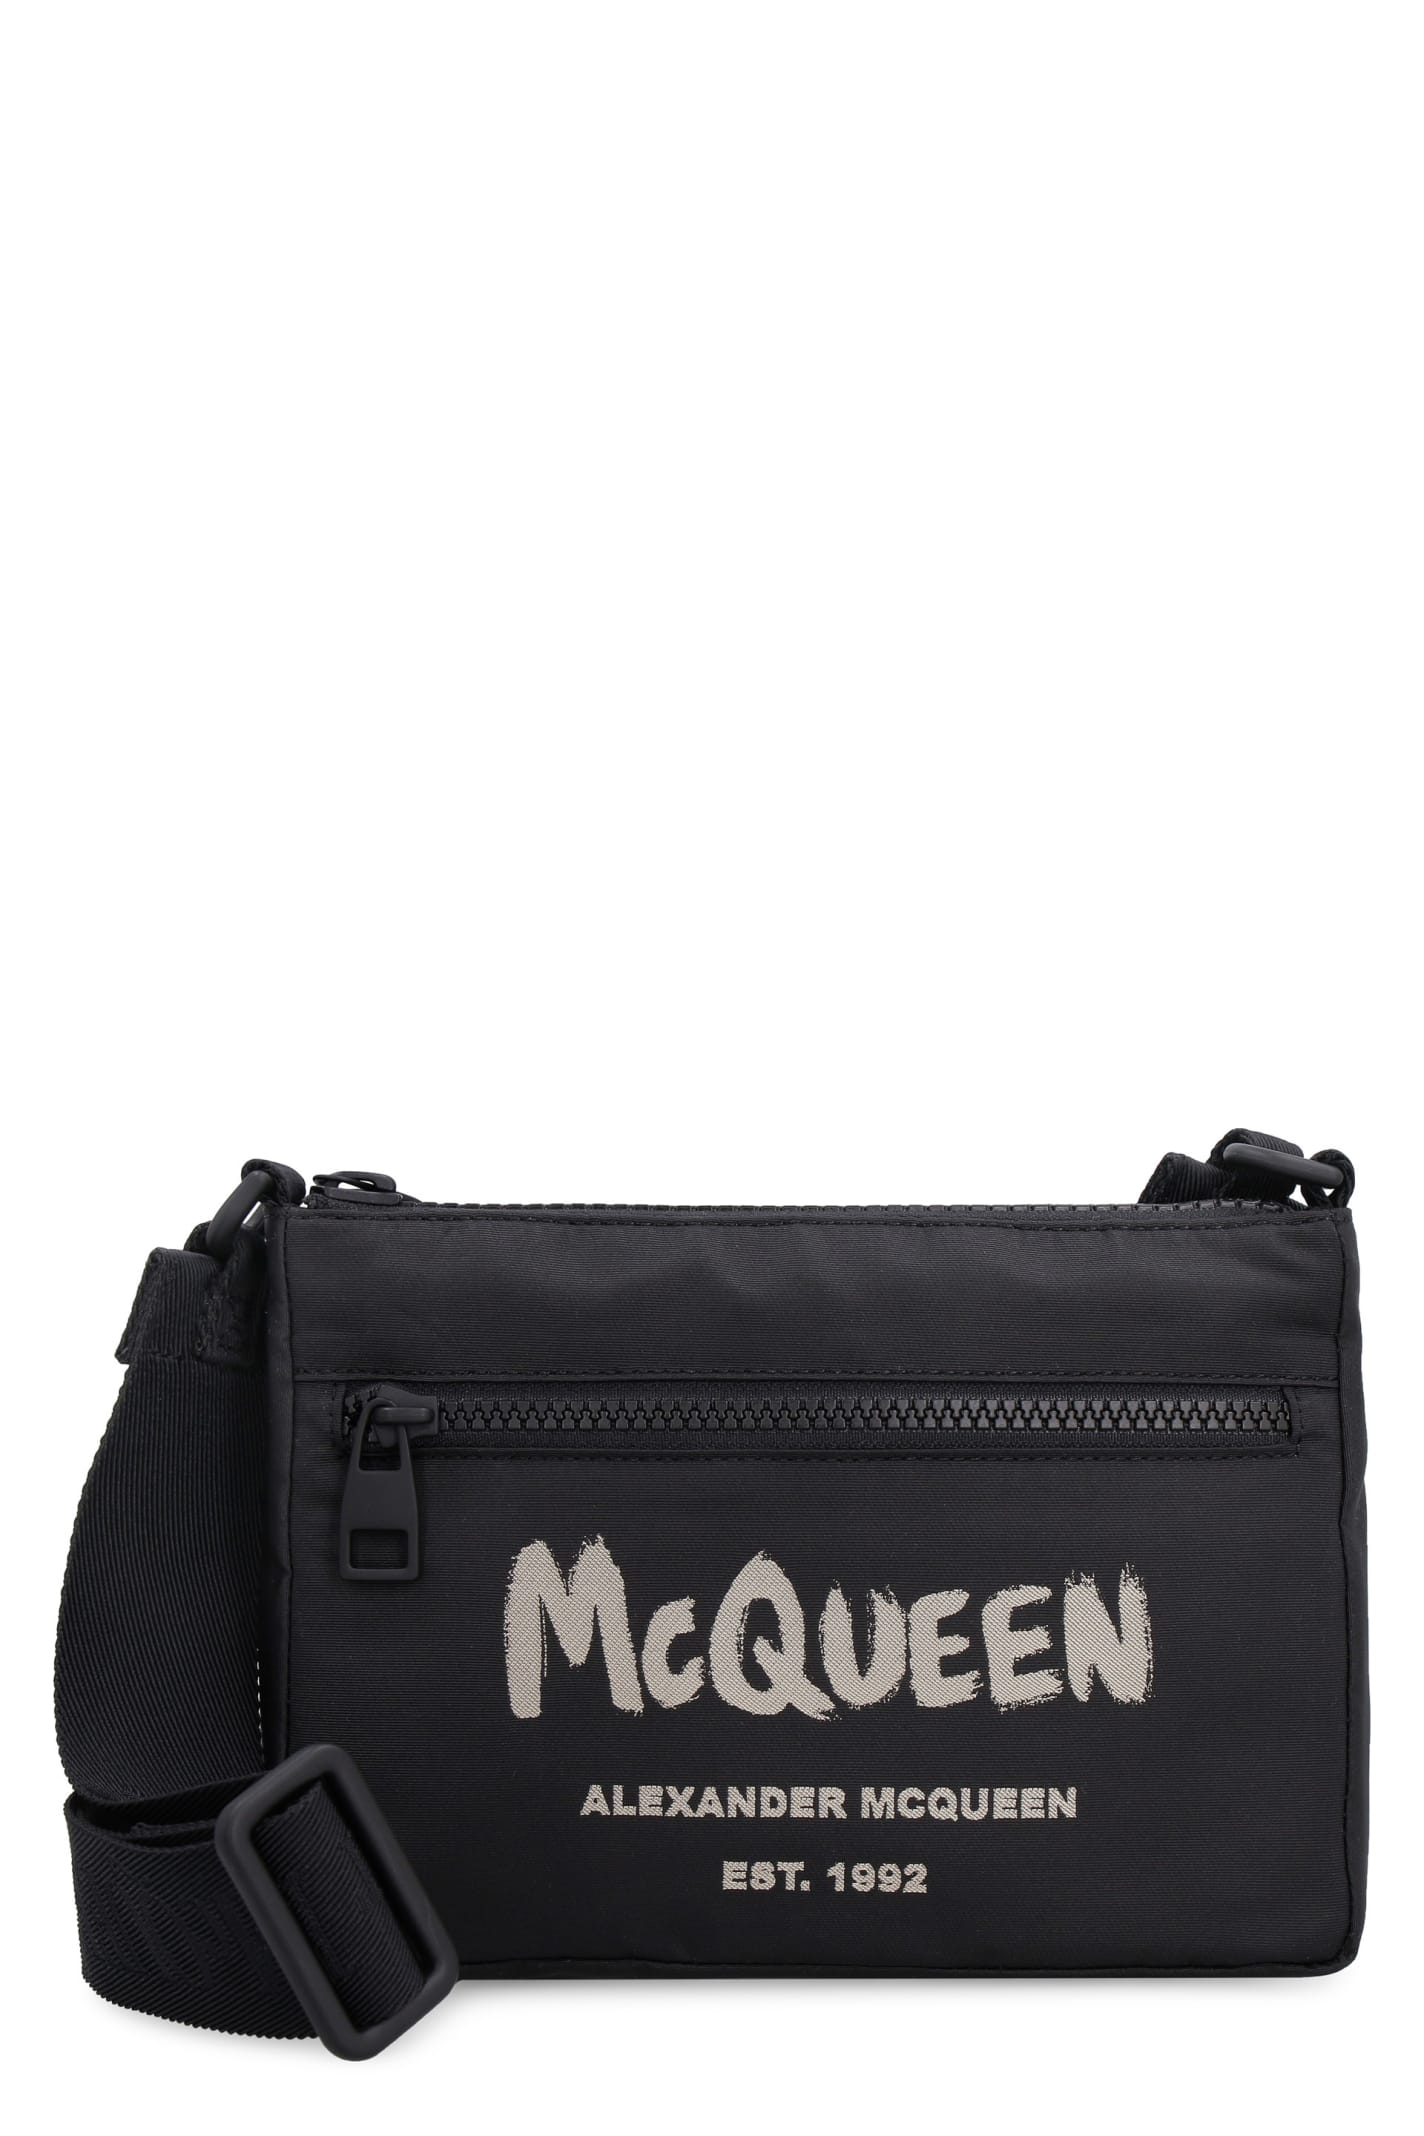 Alexander McQueen Nylon Messenger Bag